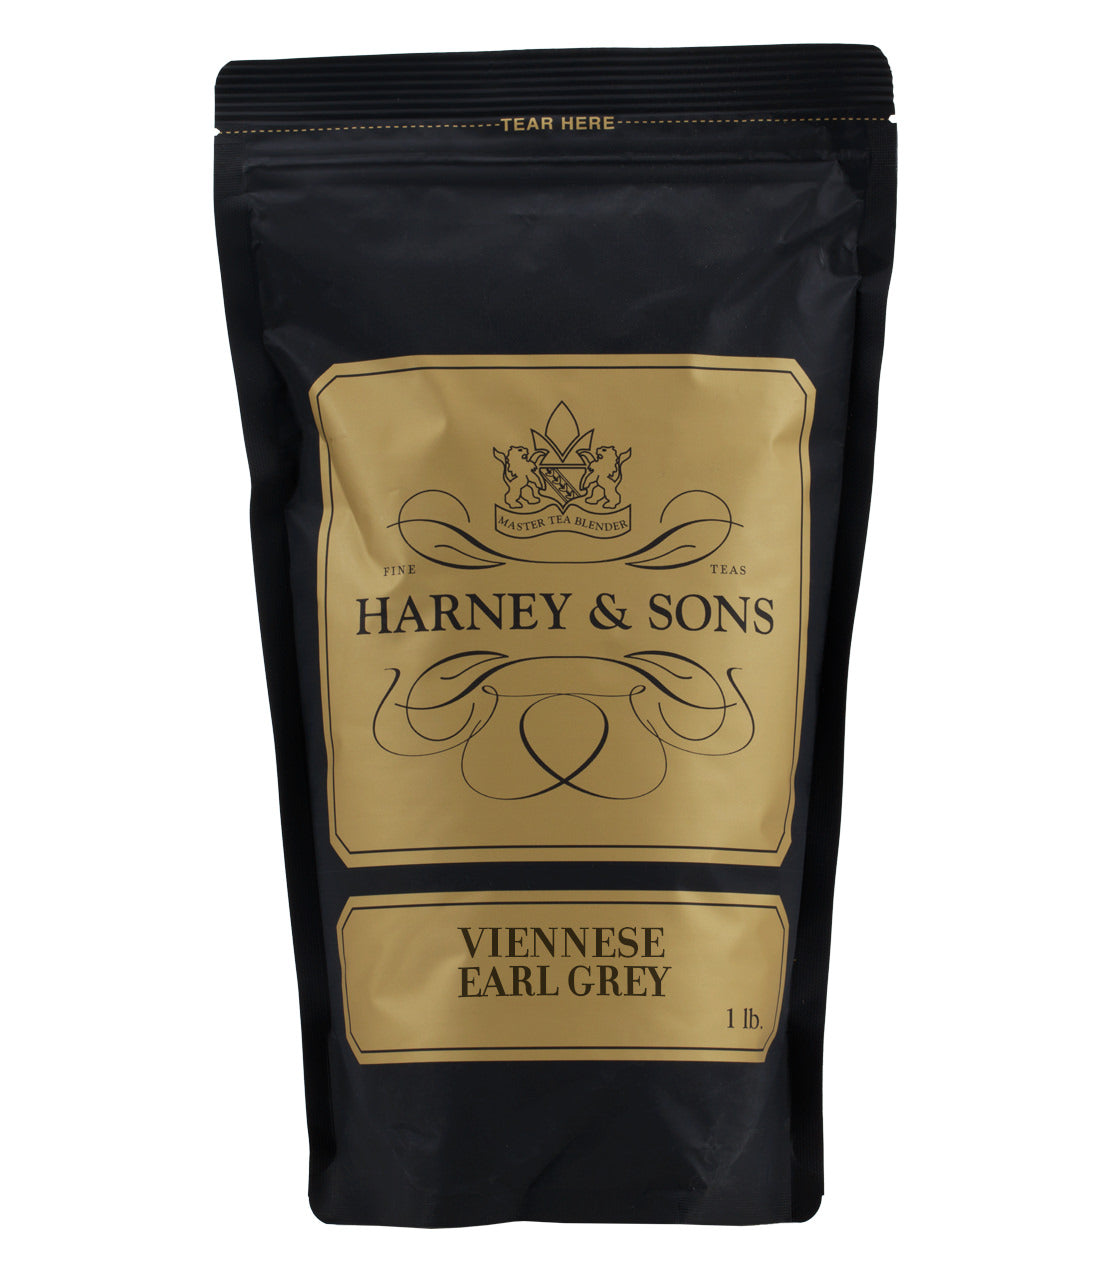 Viennese Earl Grey - Loose 1 lb. Bag - Harney & Sons Fine Teas